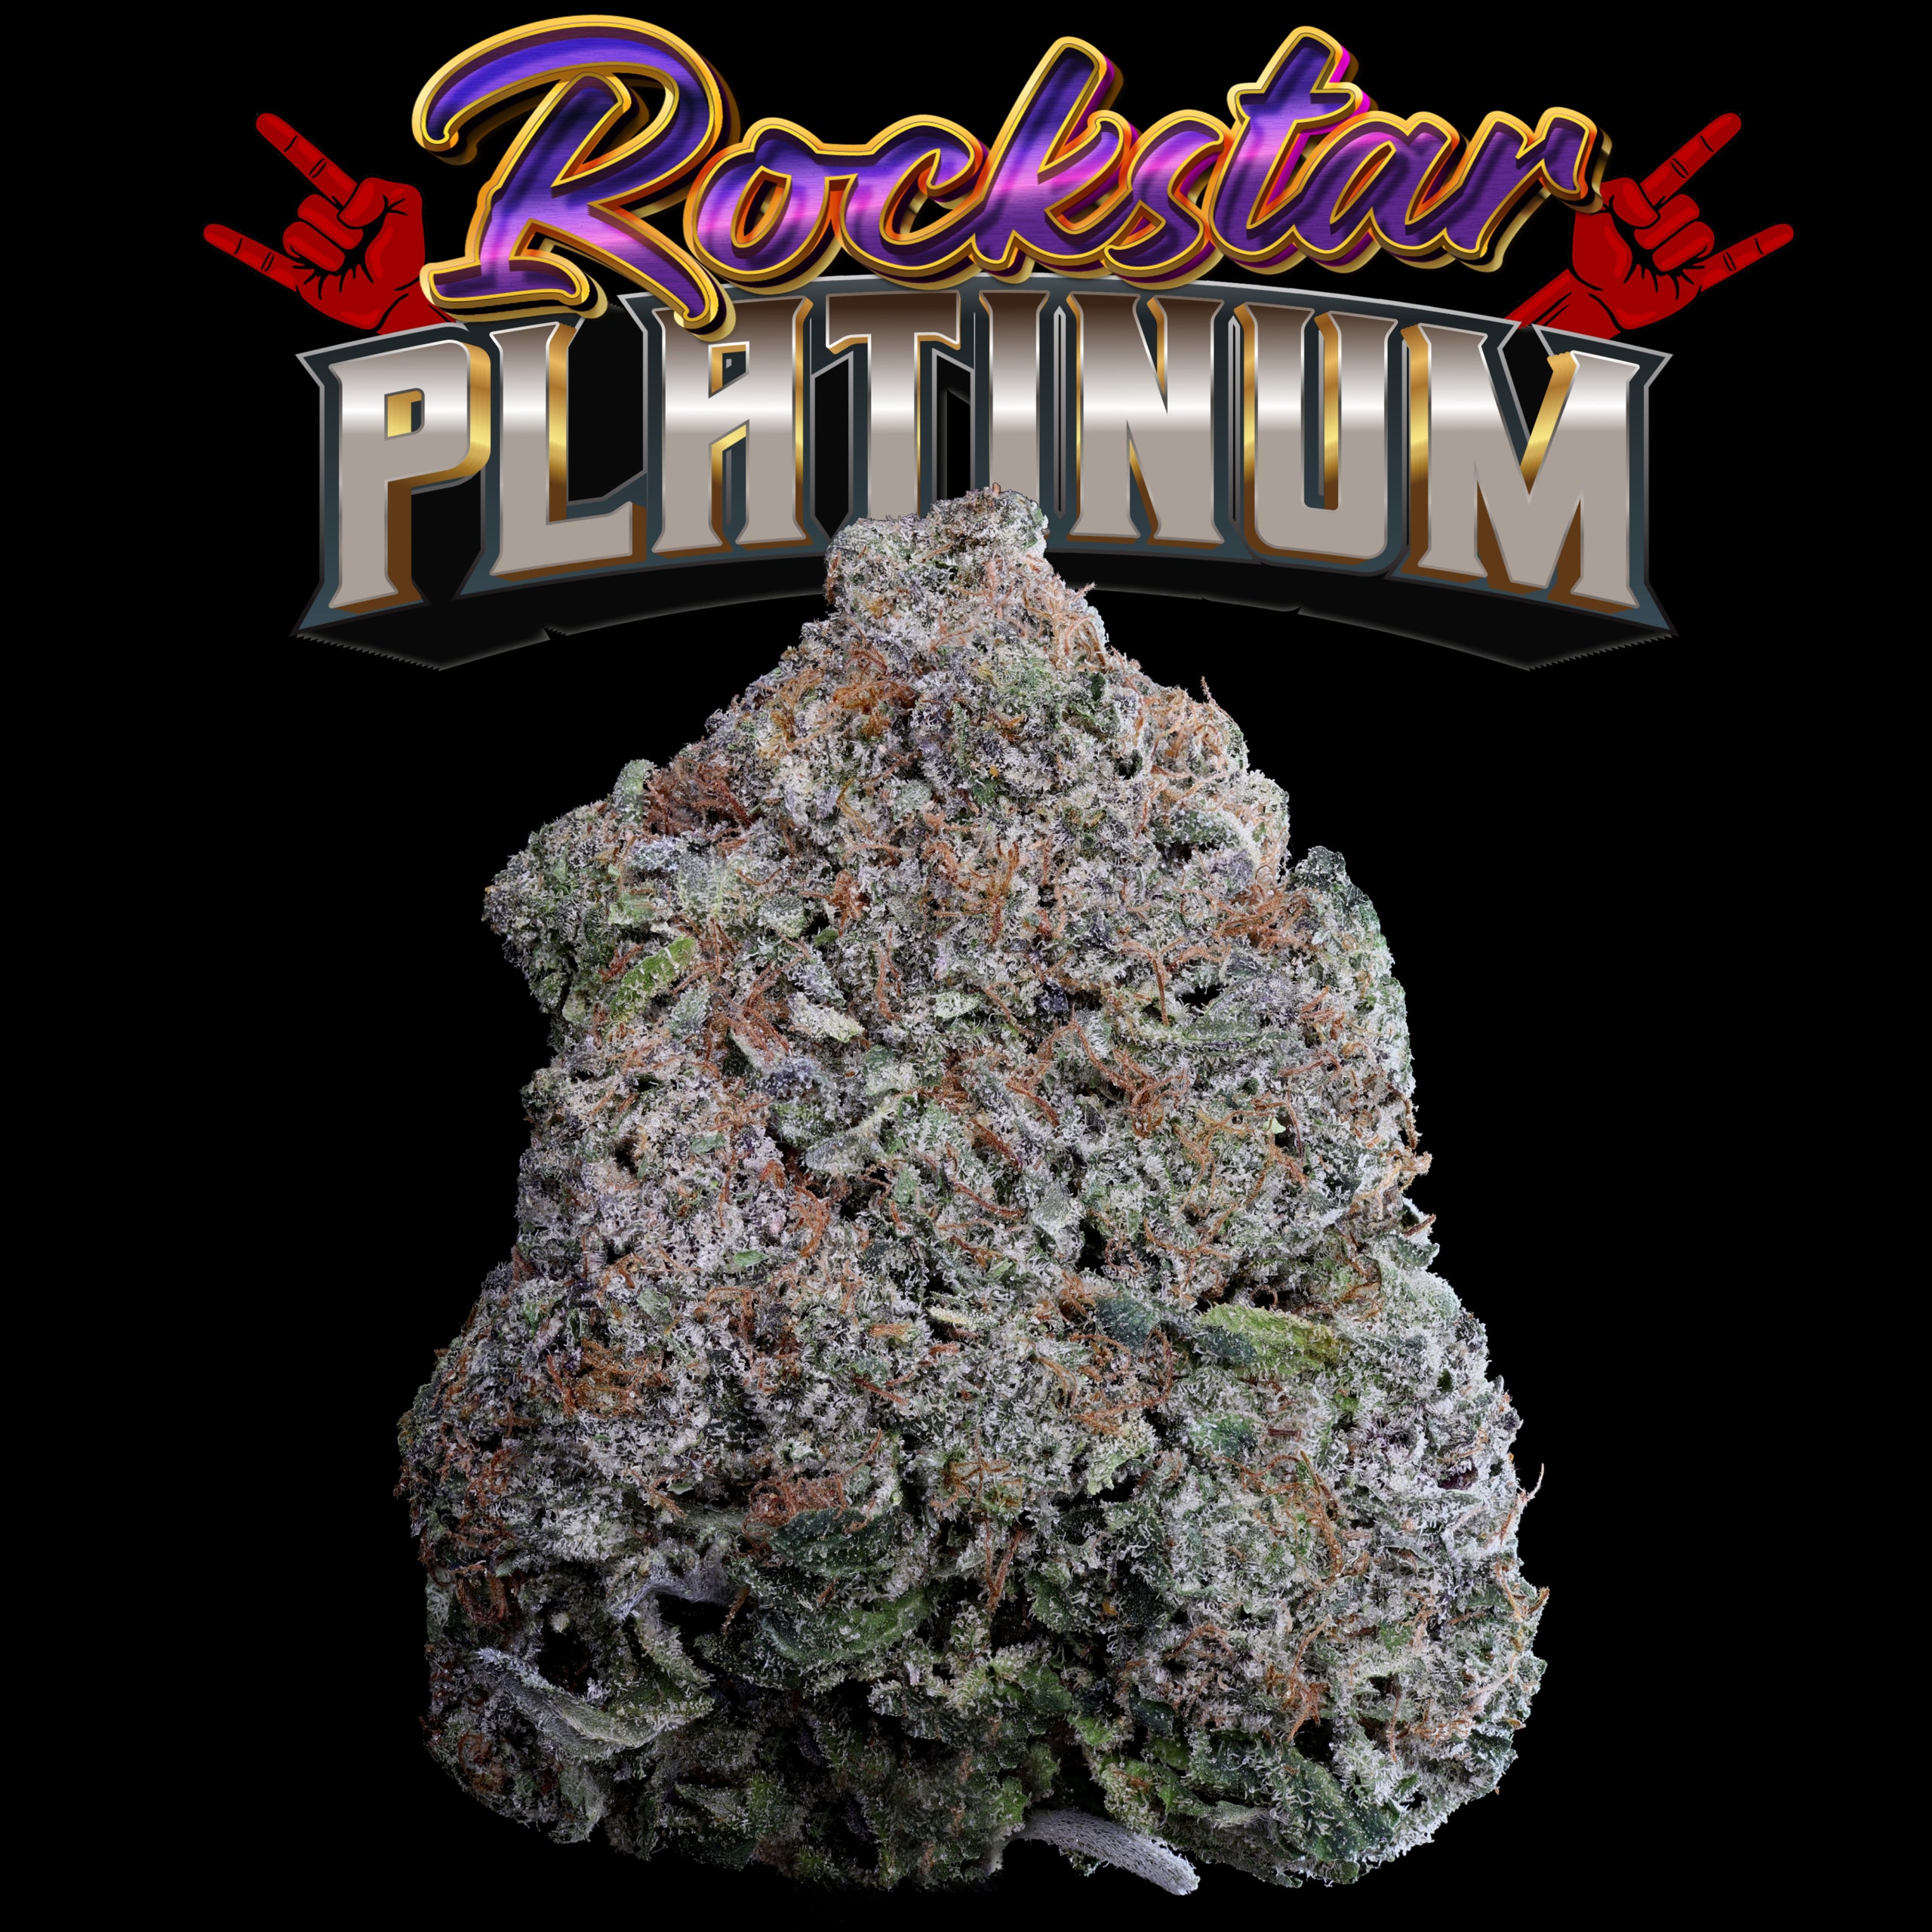 Rockstar Platinum Thumbnail